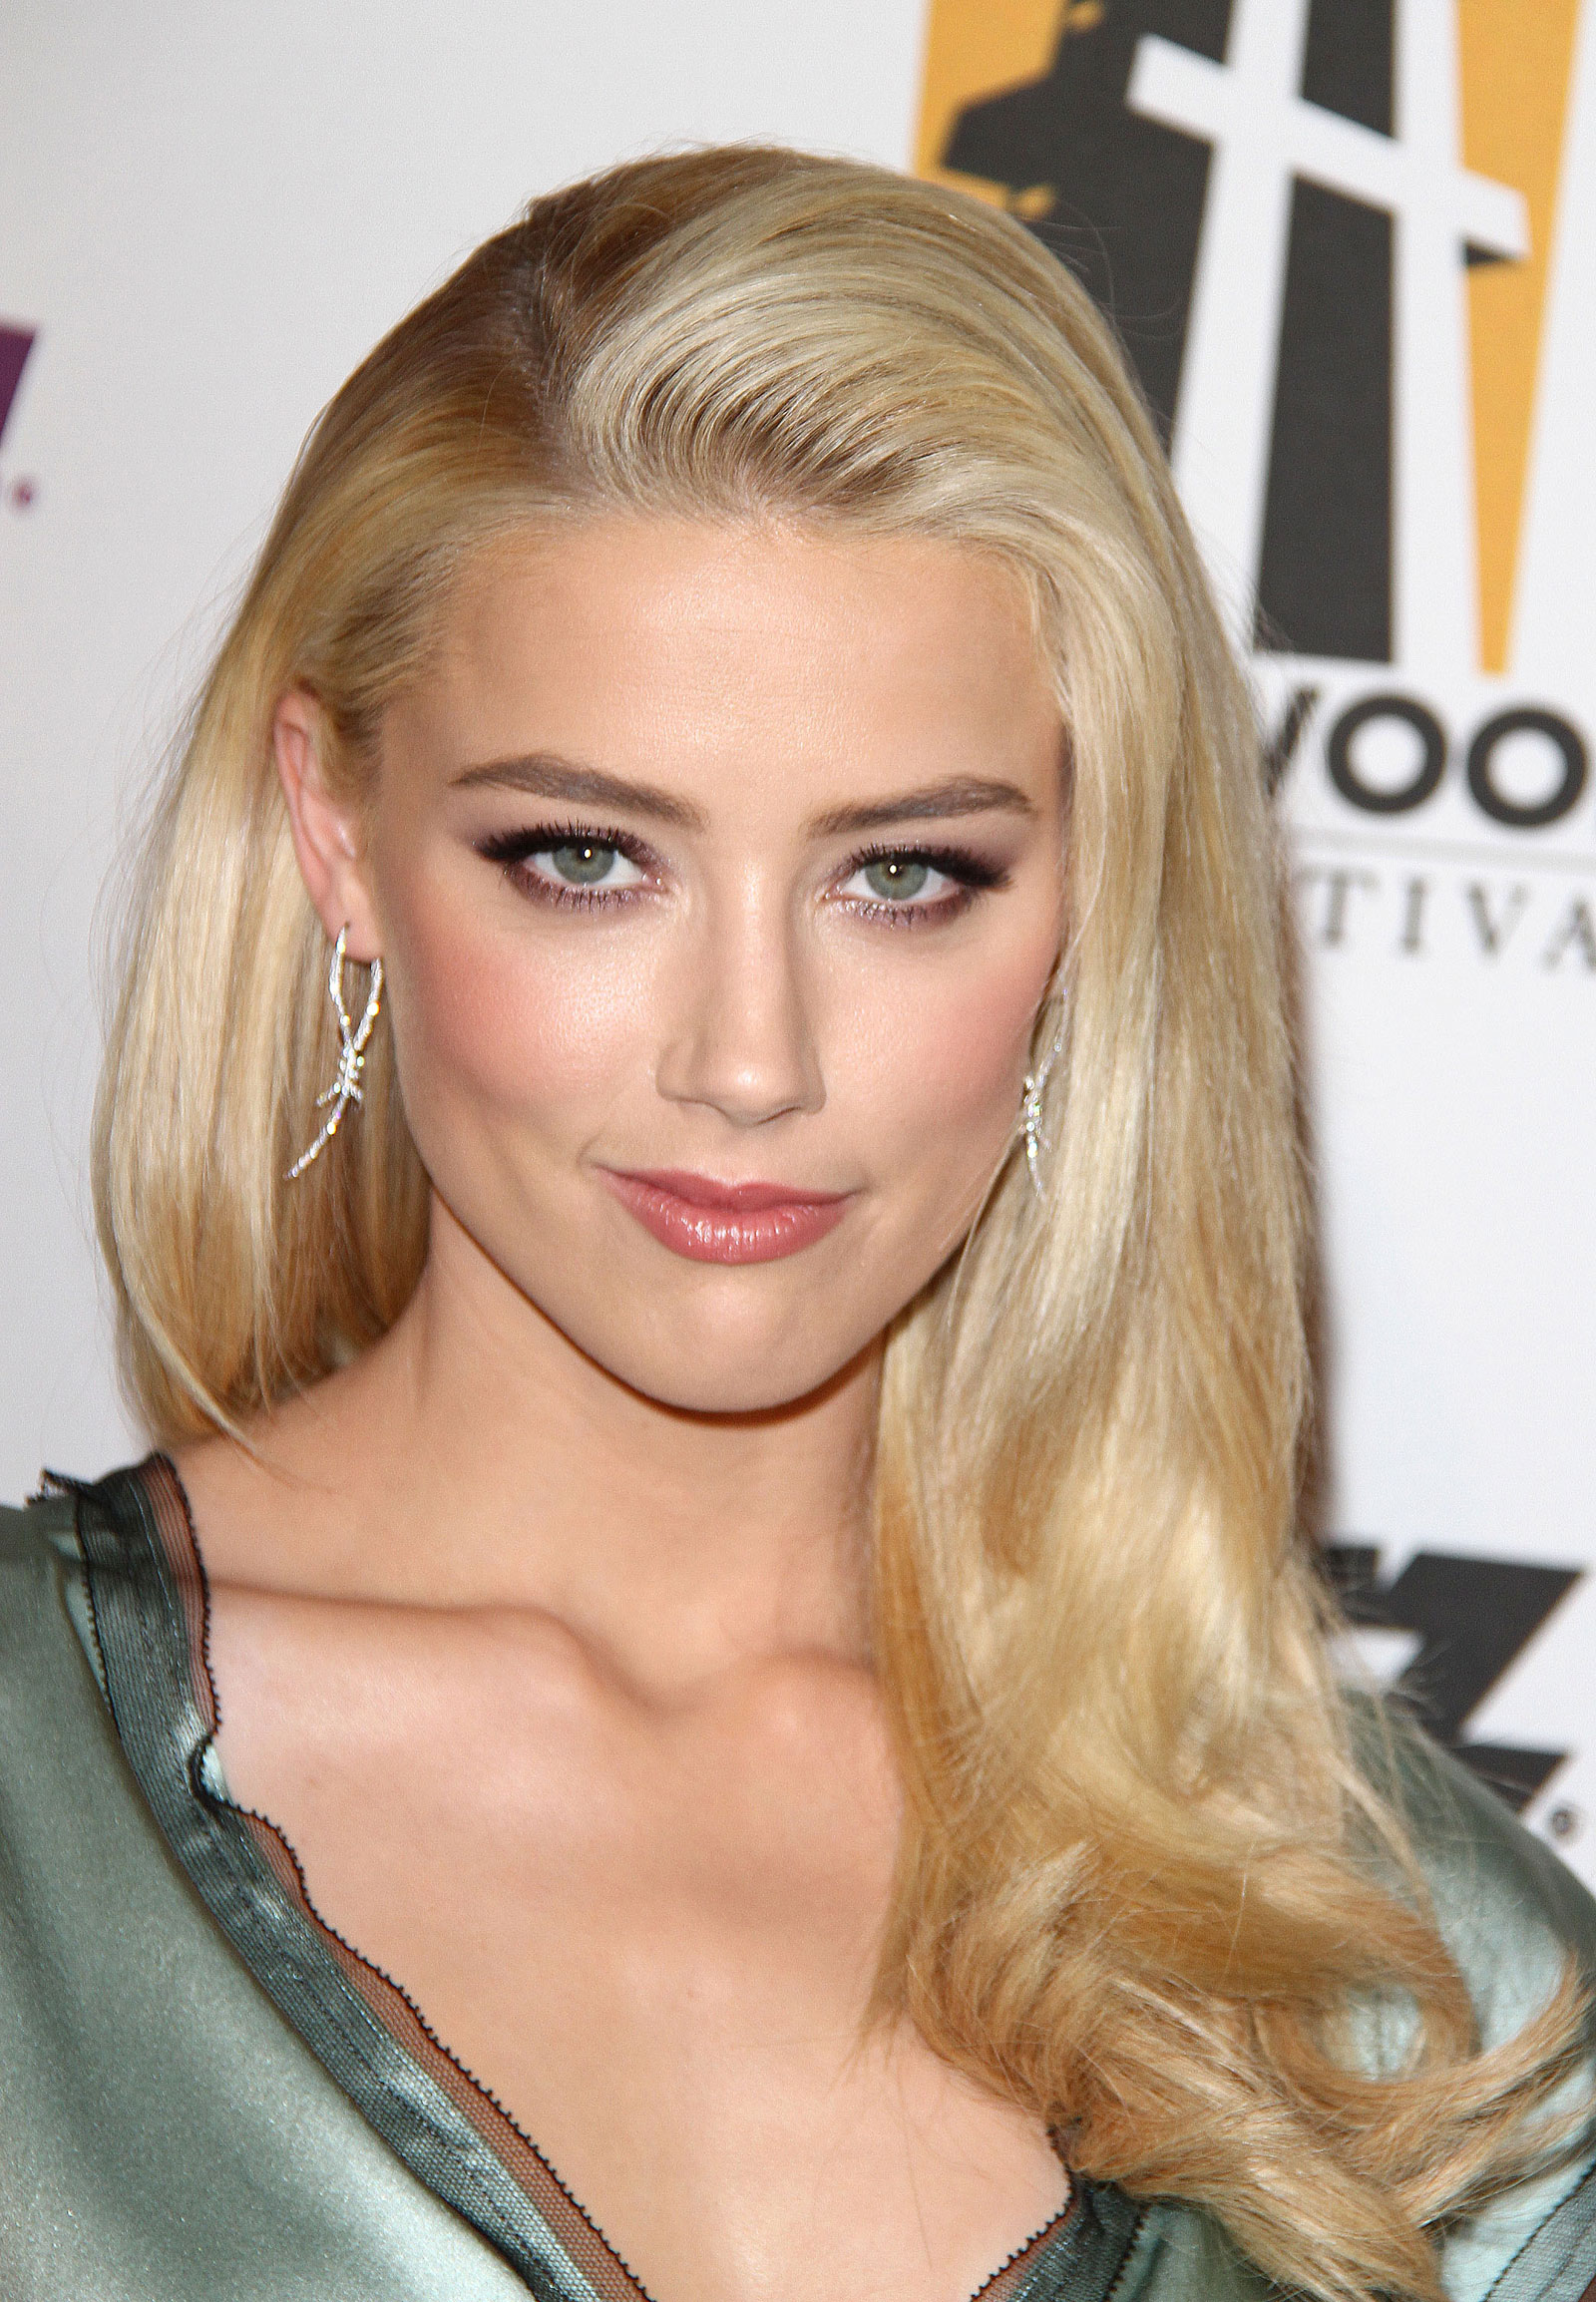 Amber Heard at The Hollywood Film Awards.